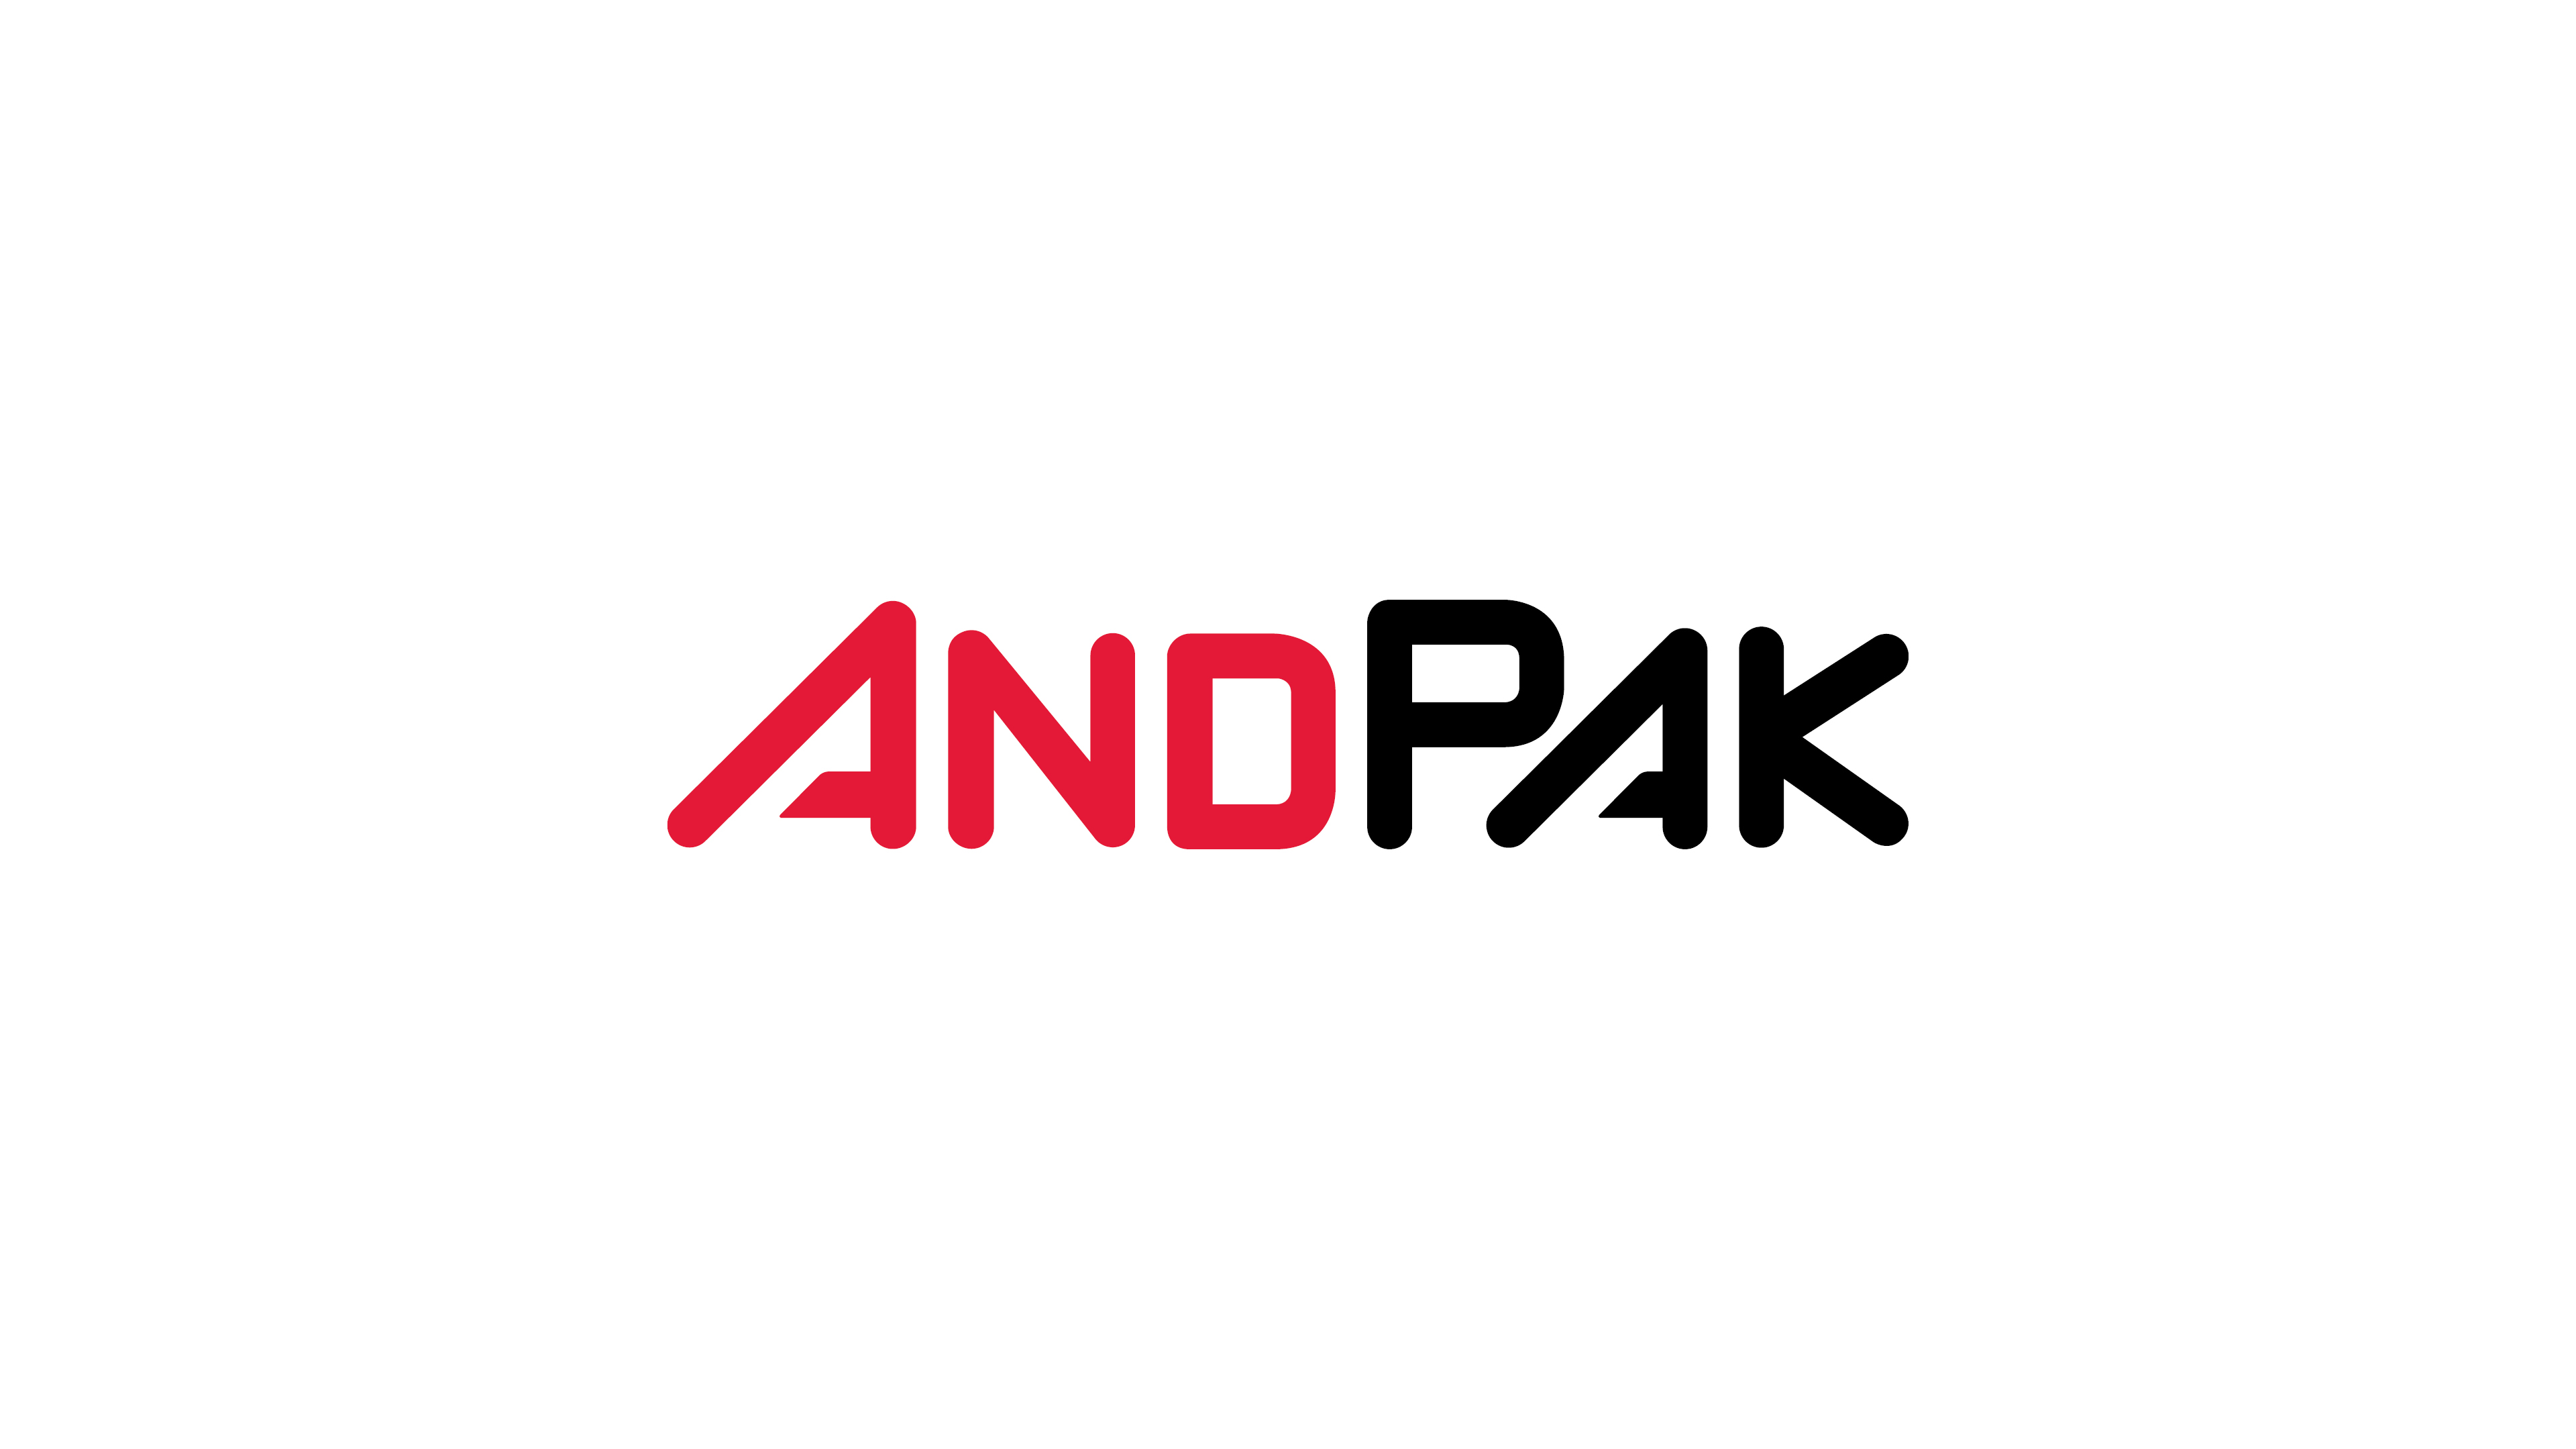 AndPak Logo and Brand Design - Saunders Design Group